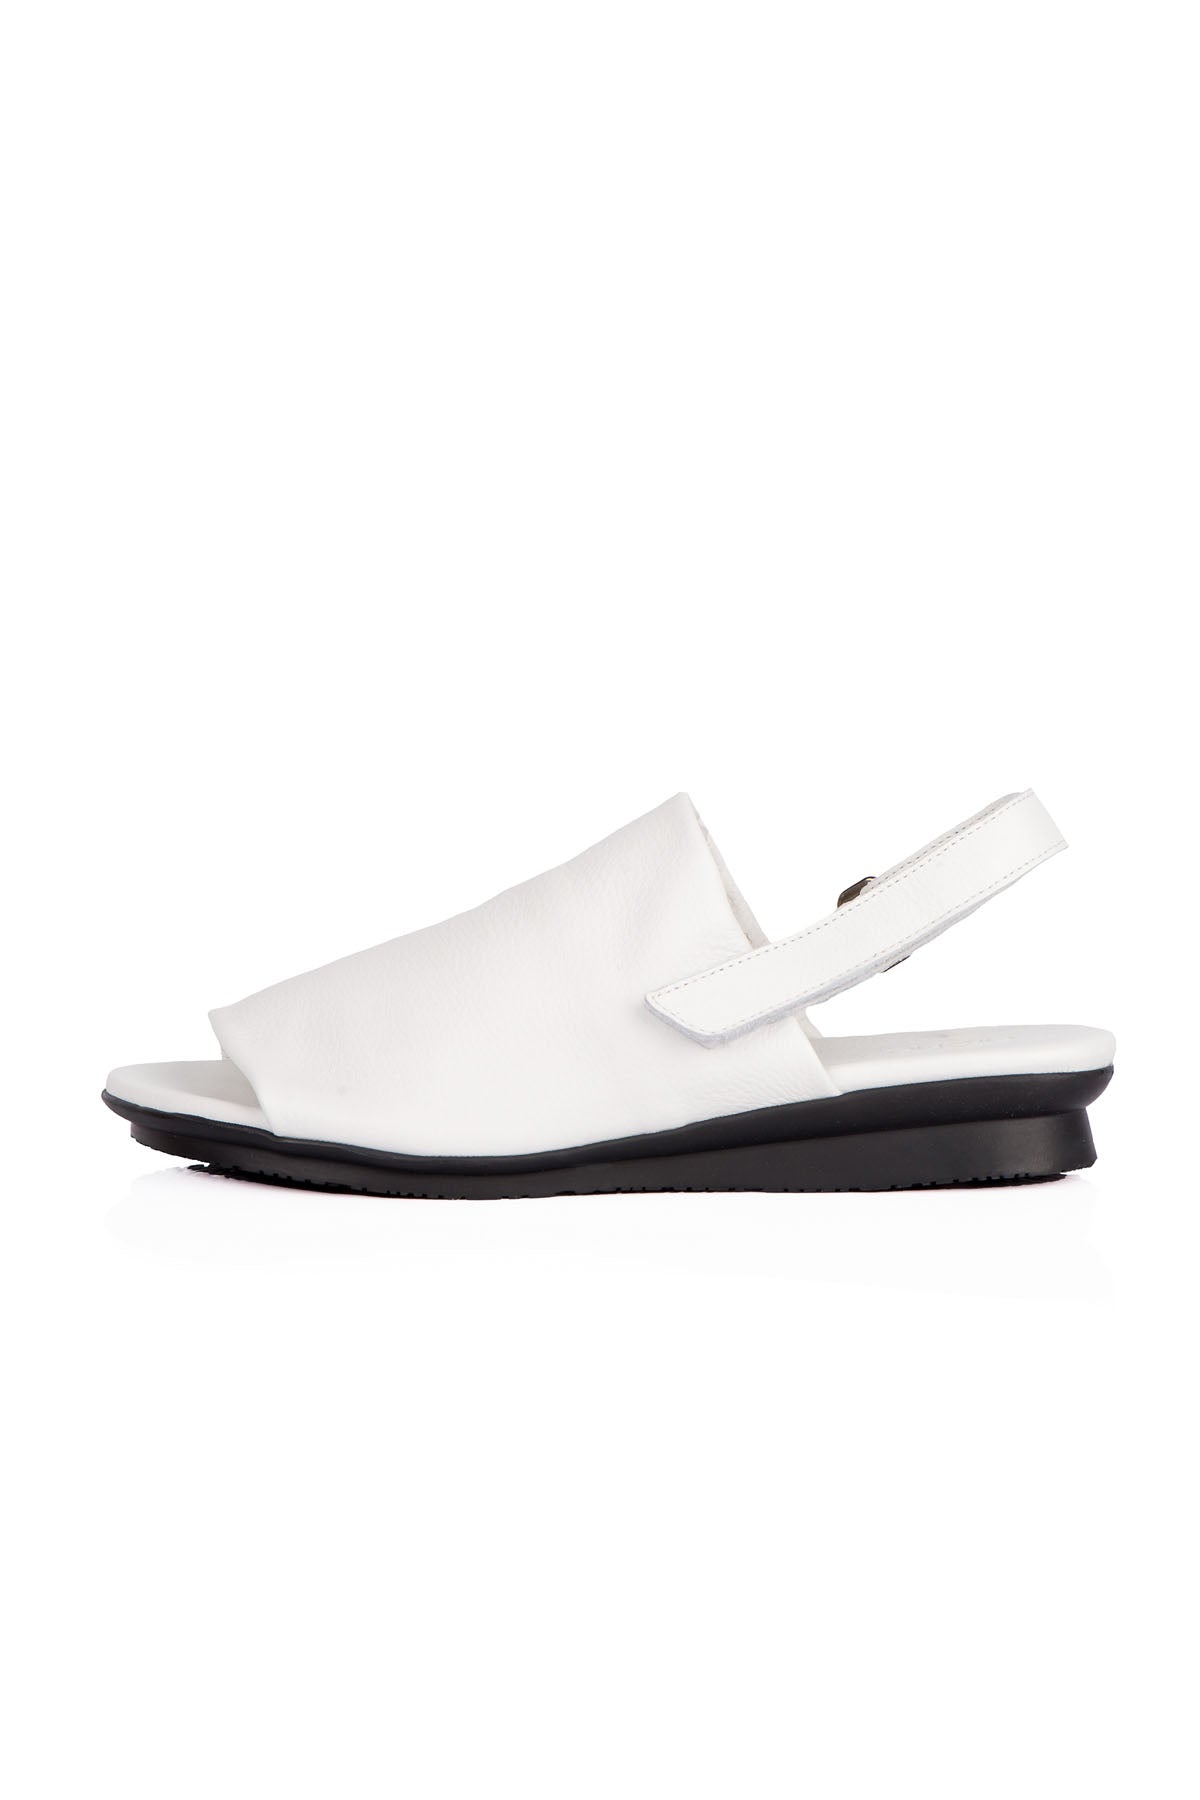 Chic & Simple Arche Aurasy Sandals - Blanc